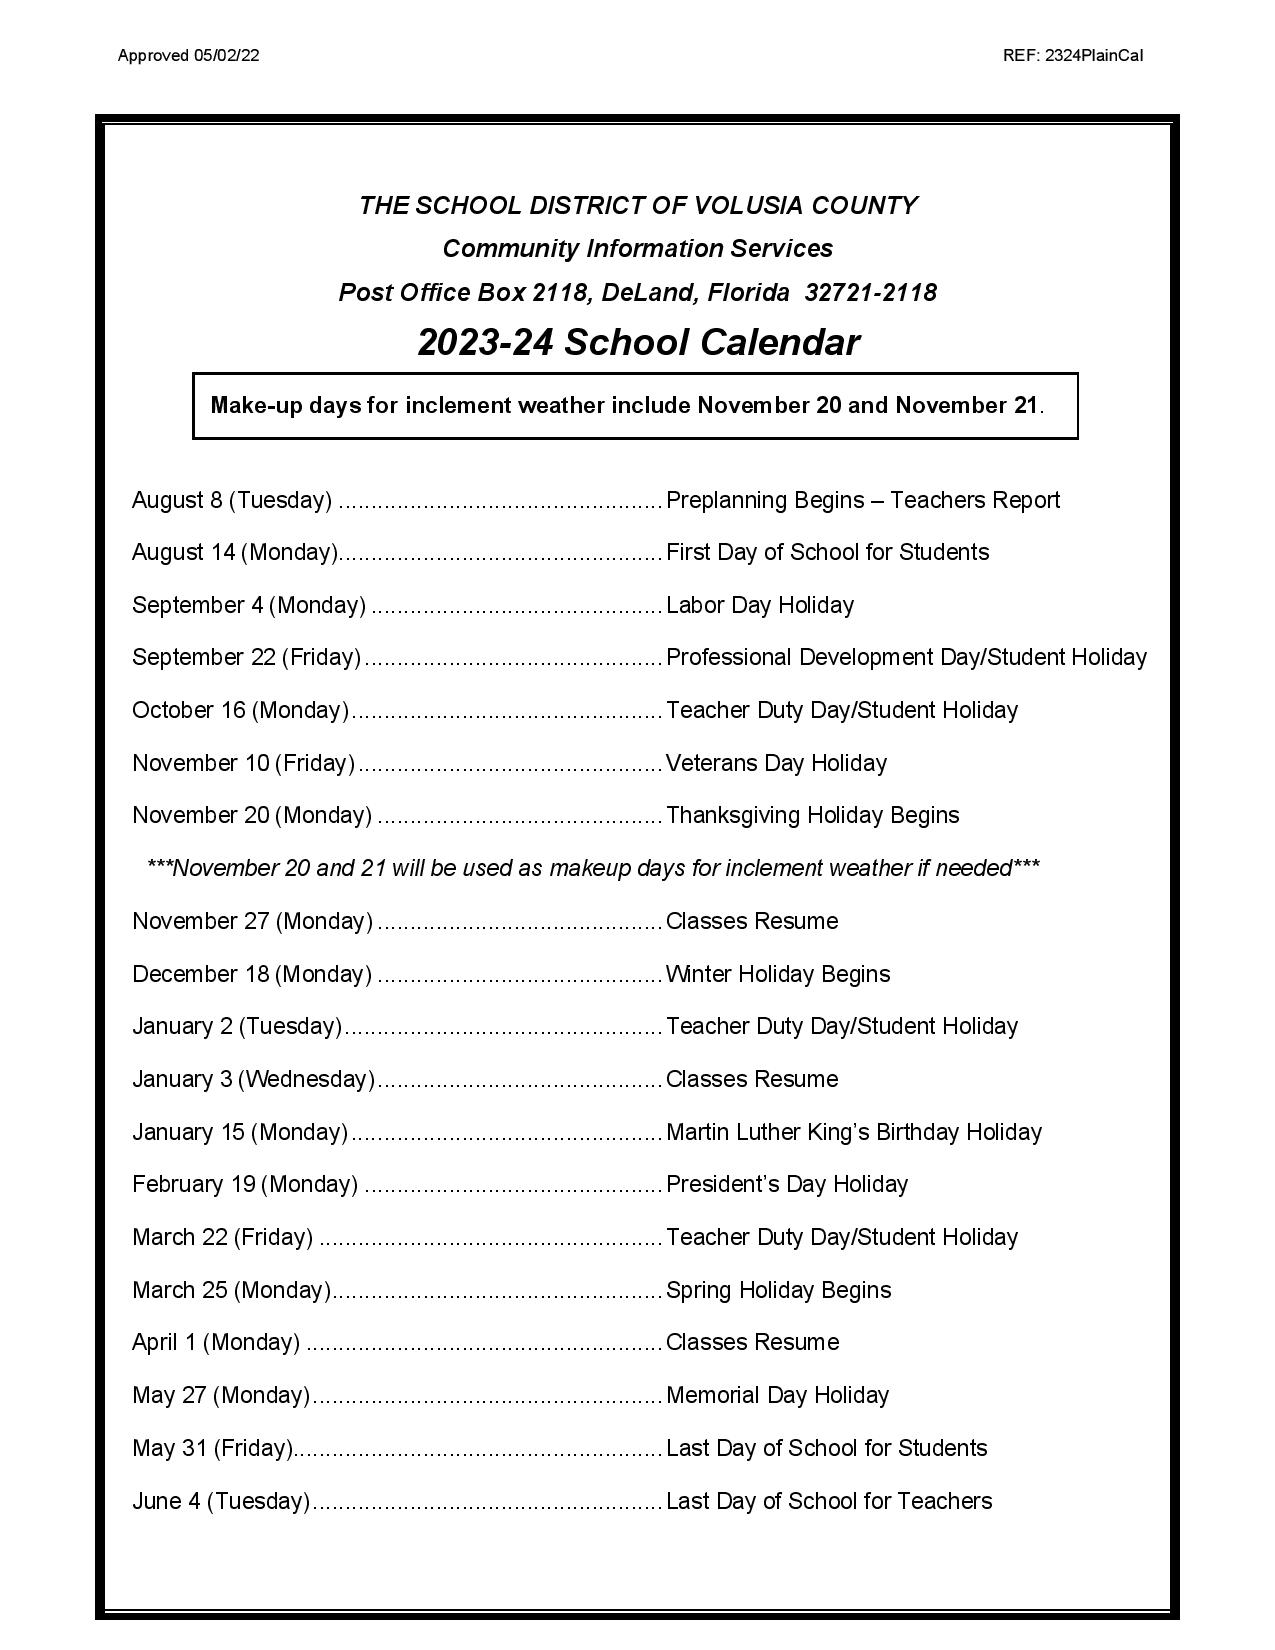 Volusia County Schools Calendar Holidays 20232024 PDF